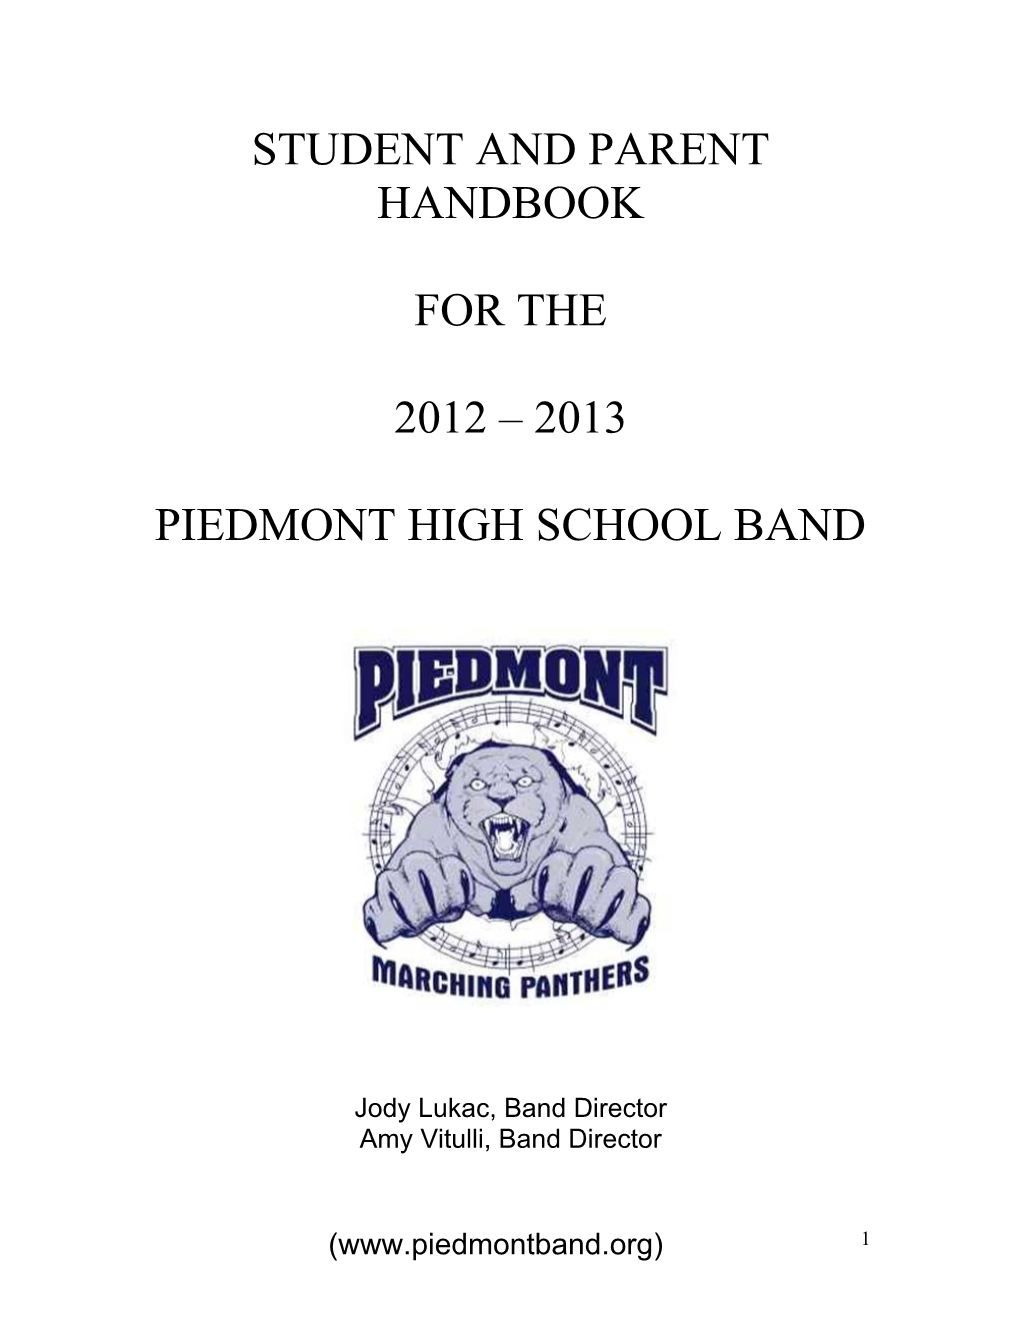 Piedmont High School Band